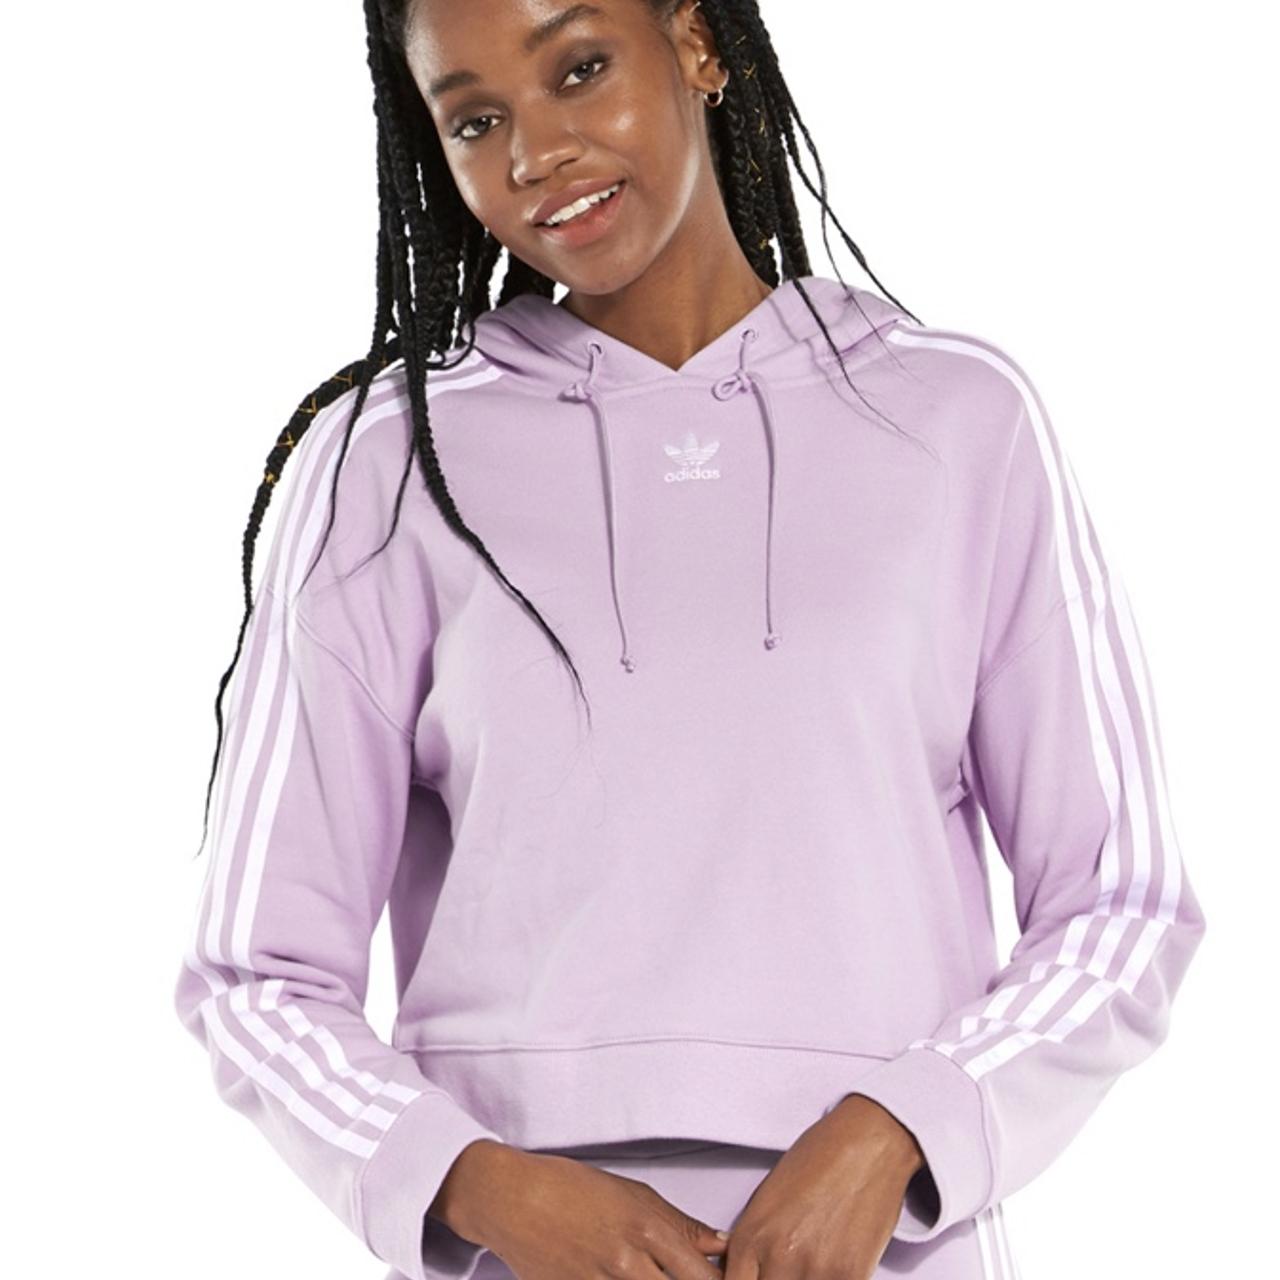 deken Voorrecht Hallo Adidas cropped lilac hoodie size 8 Such a gorgeous... - Depop